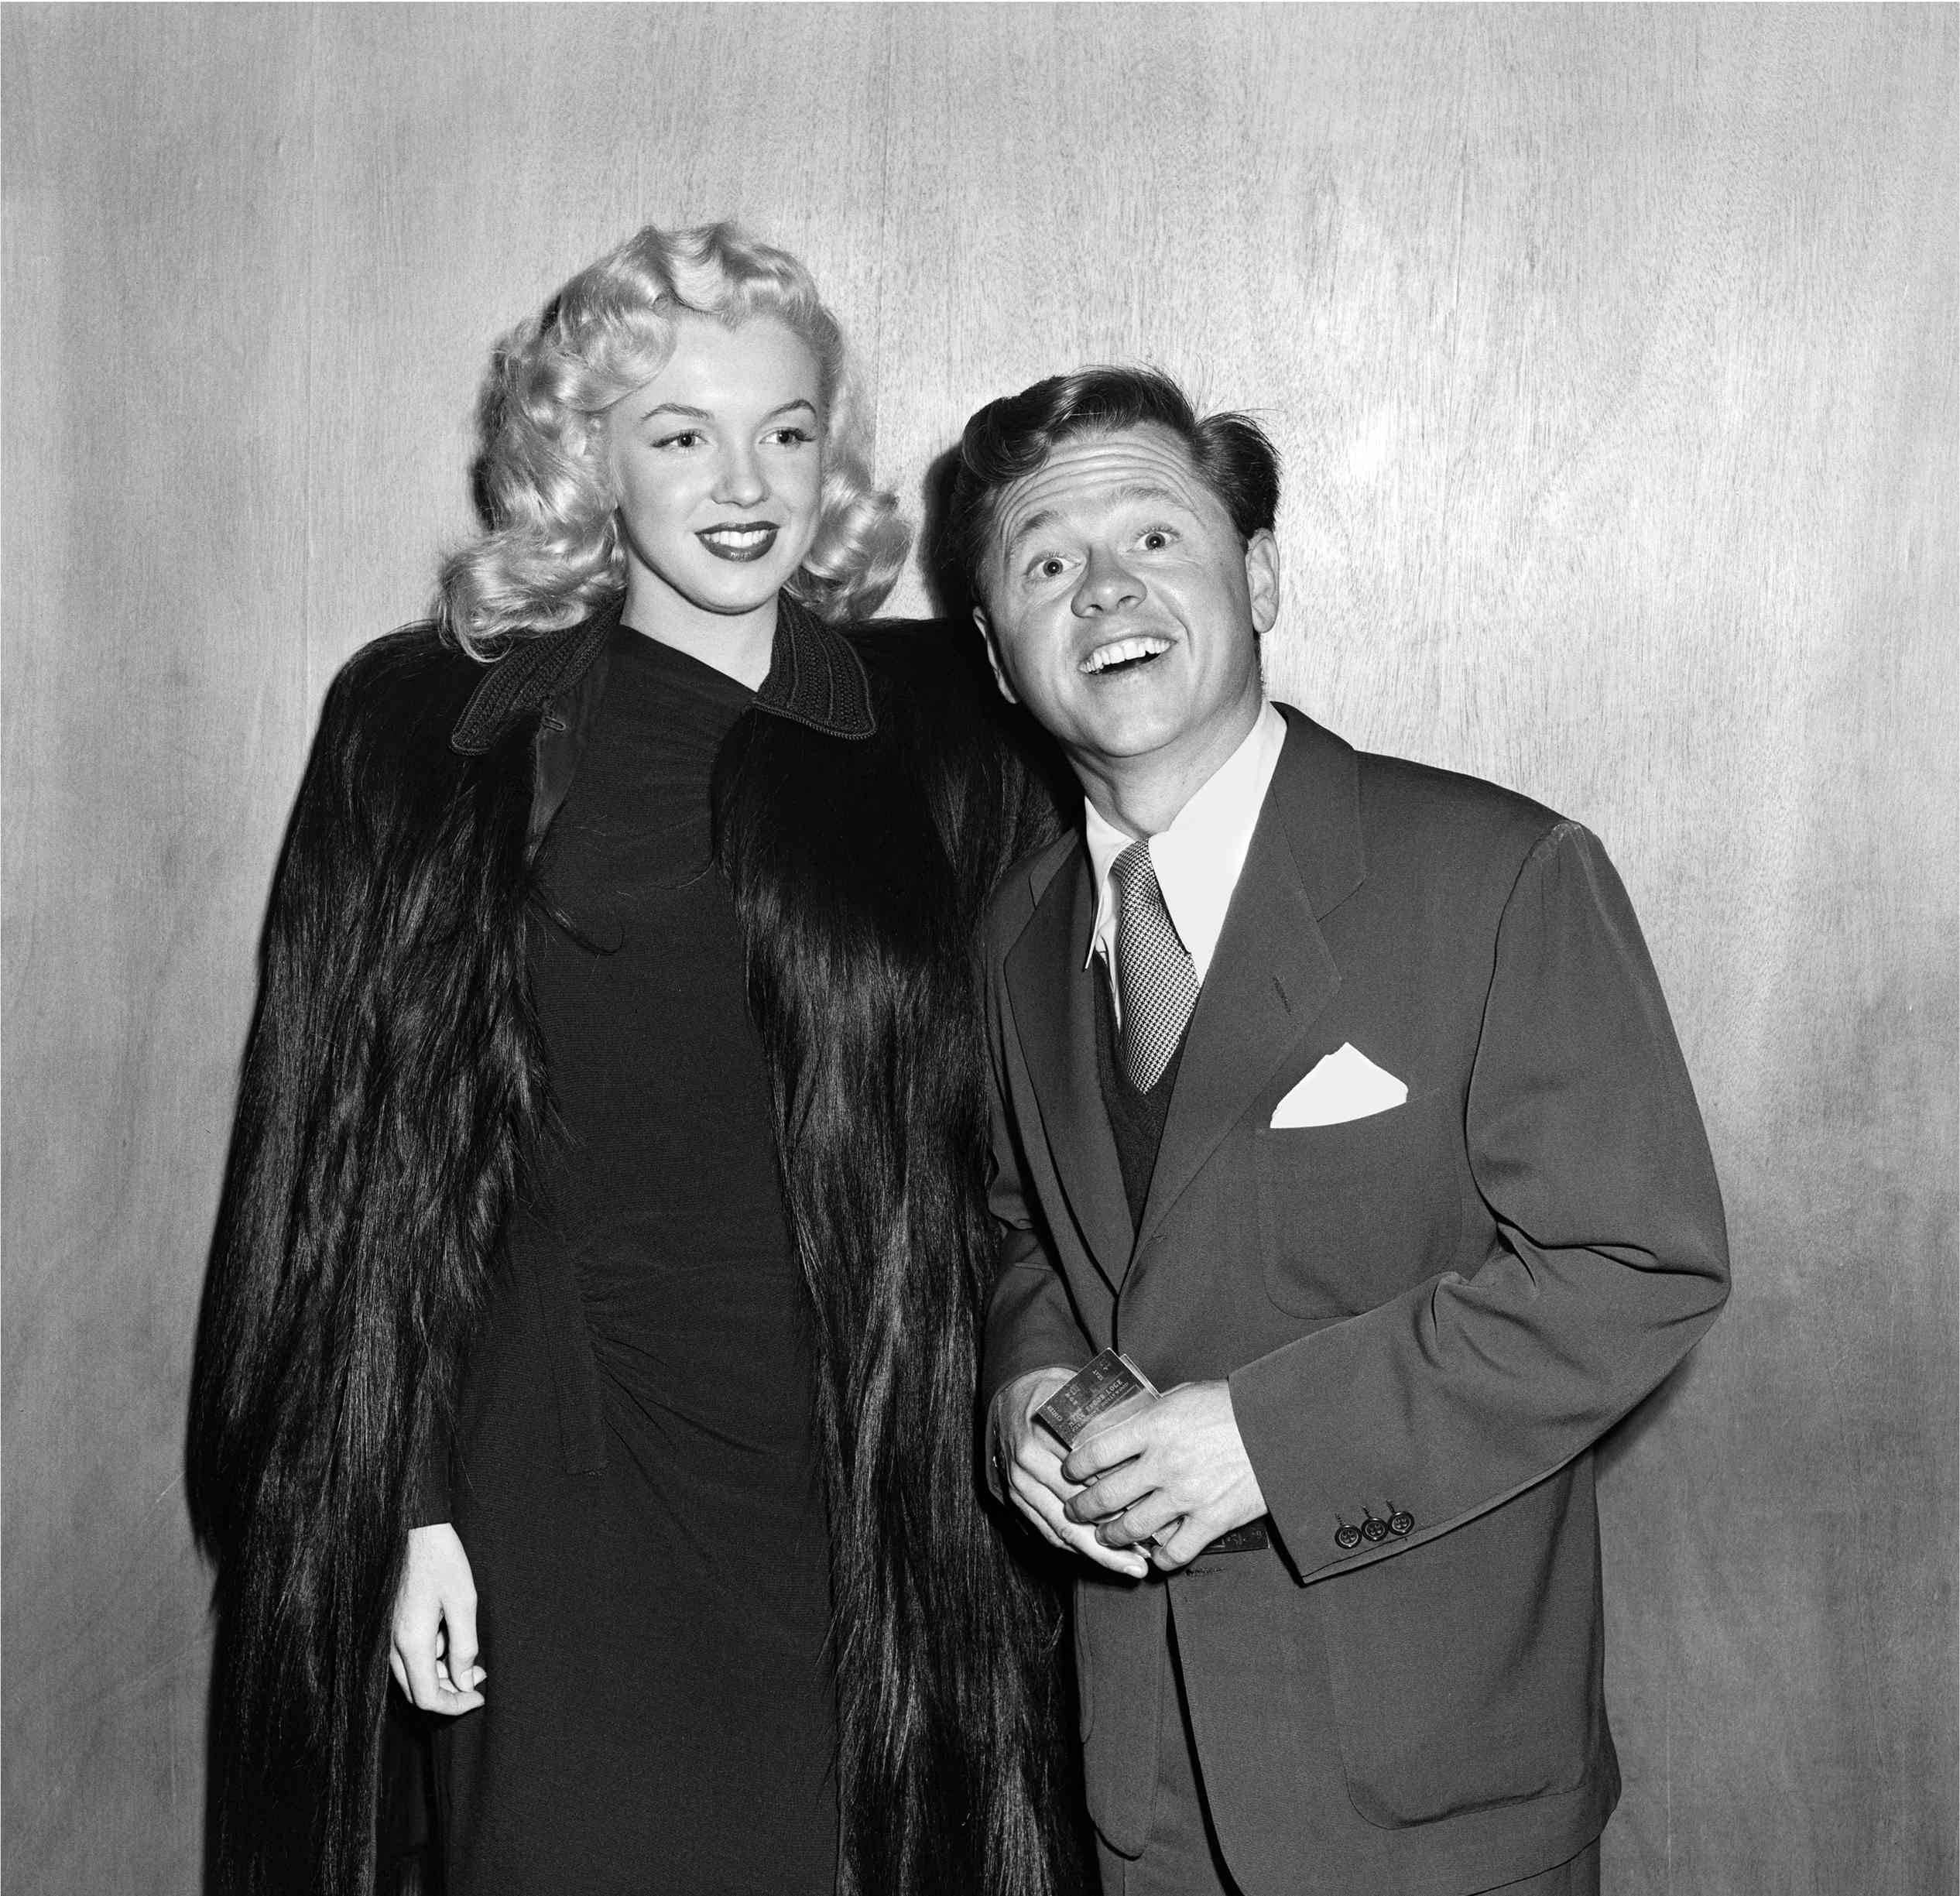 Frank Worth Portrait Photograph - Marilyn Monroe and Mickey Rooney Fine Art Print